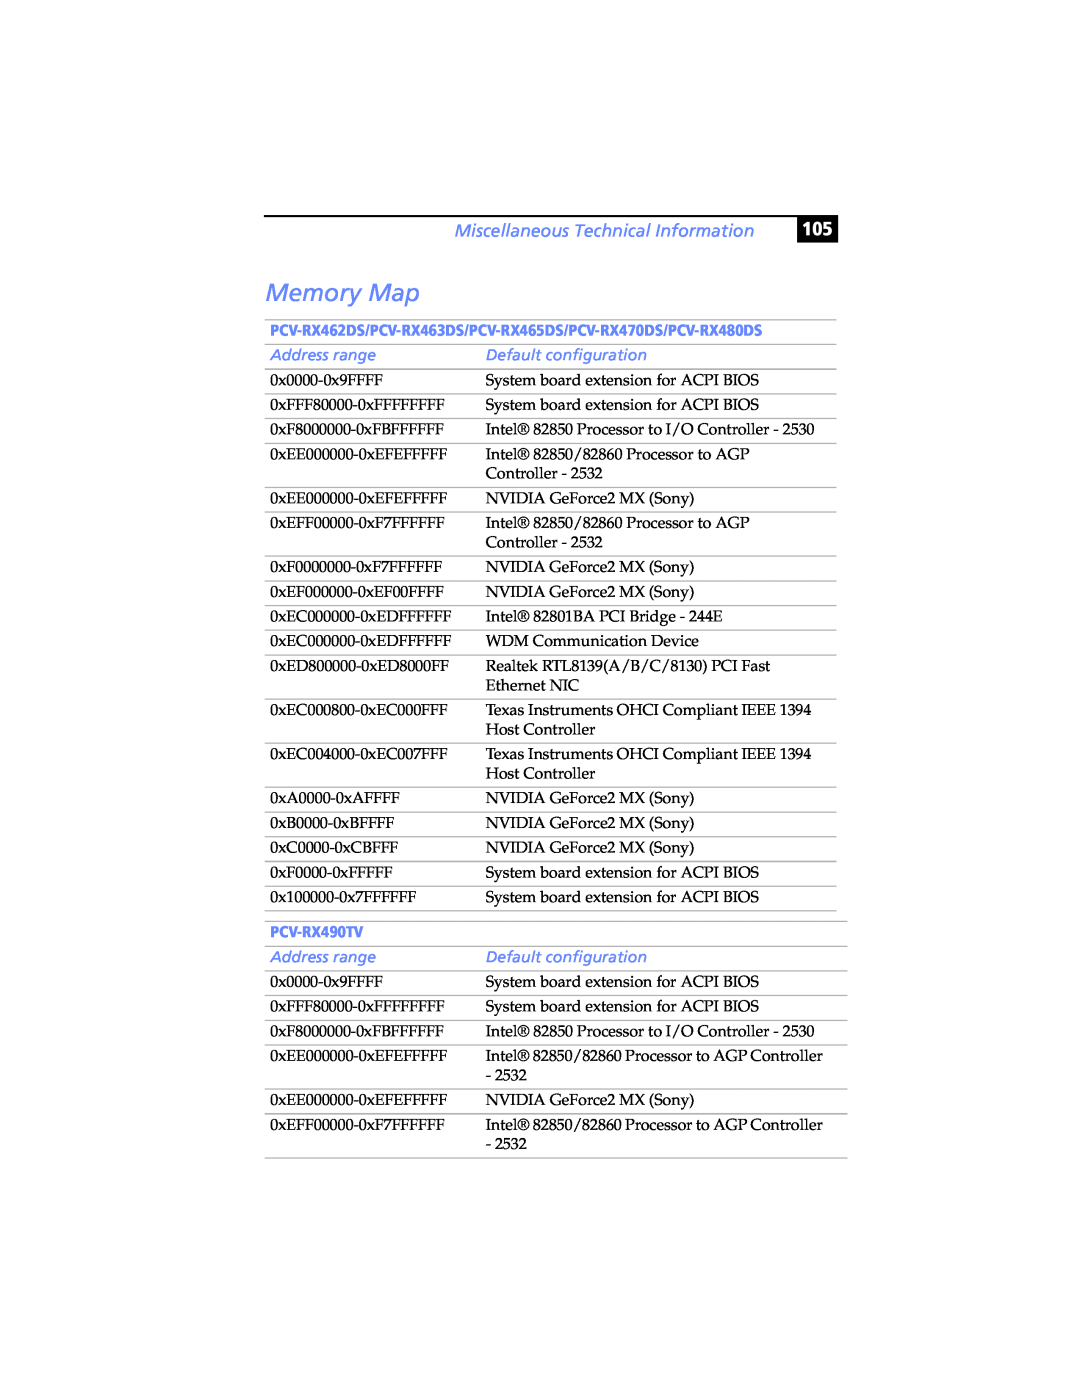 Sony PCV-RX465DS manual Memory Map, Miscellaneous Technical Information, Address range, Default configuration, PCV-RX490TV 